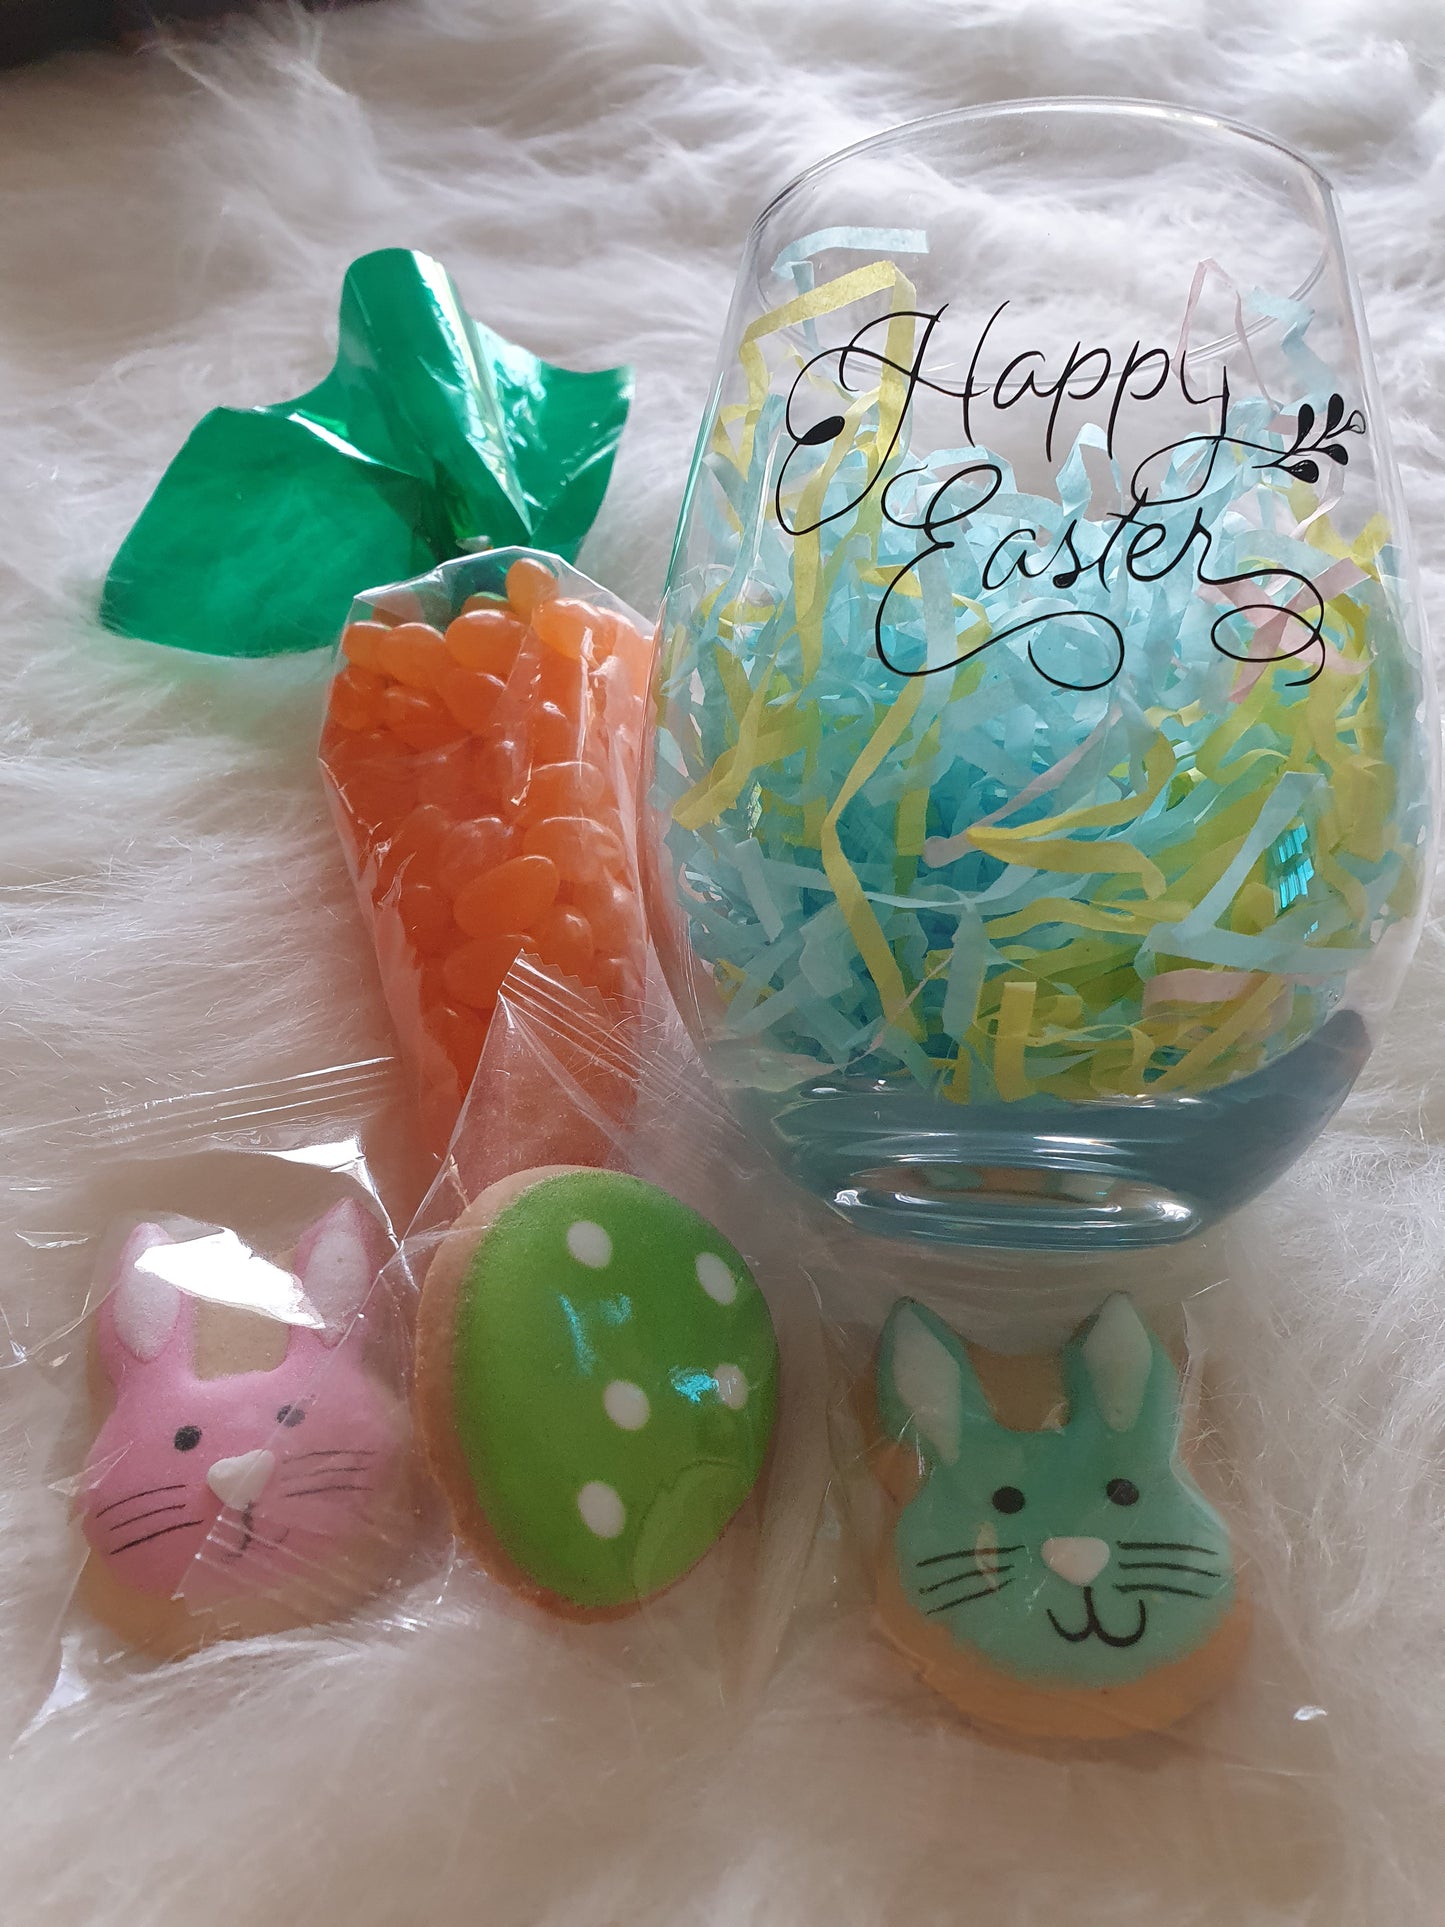 Happy Easter glasses